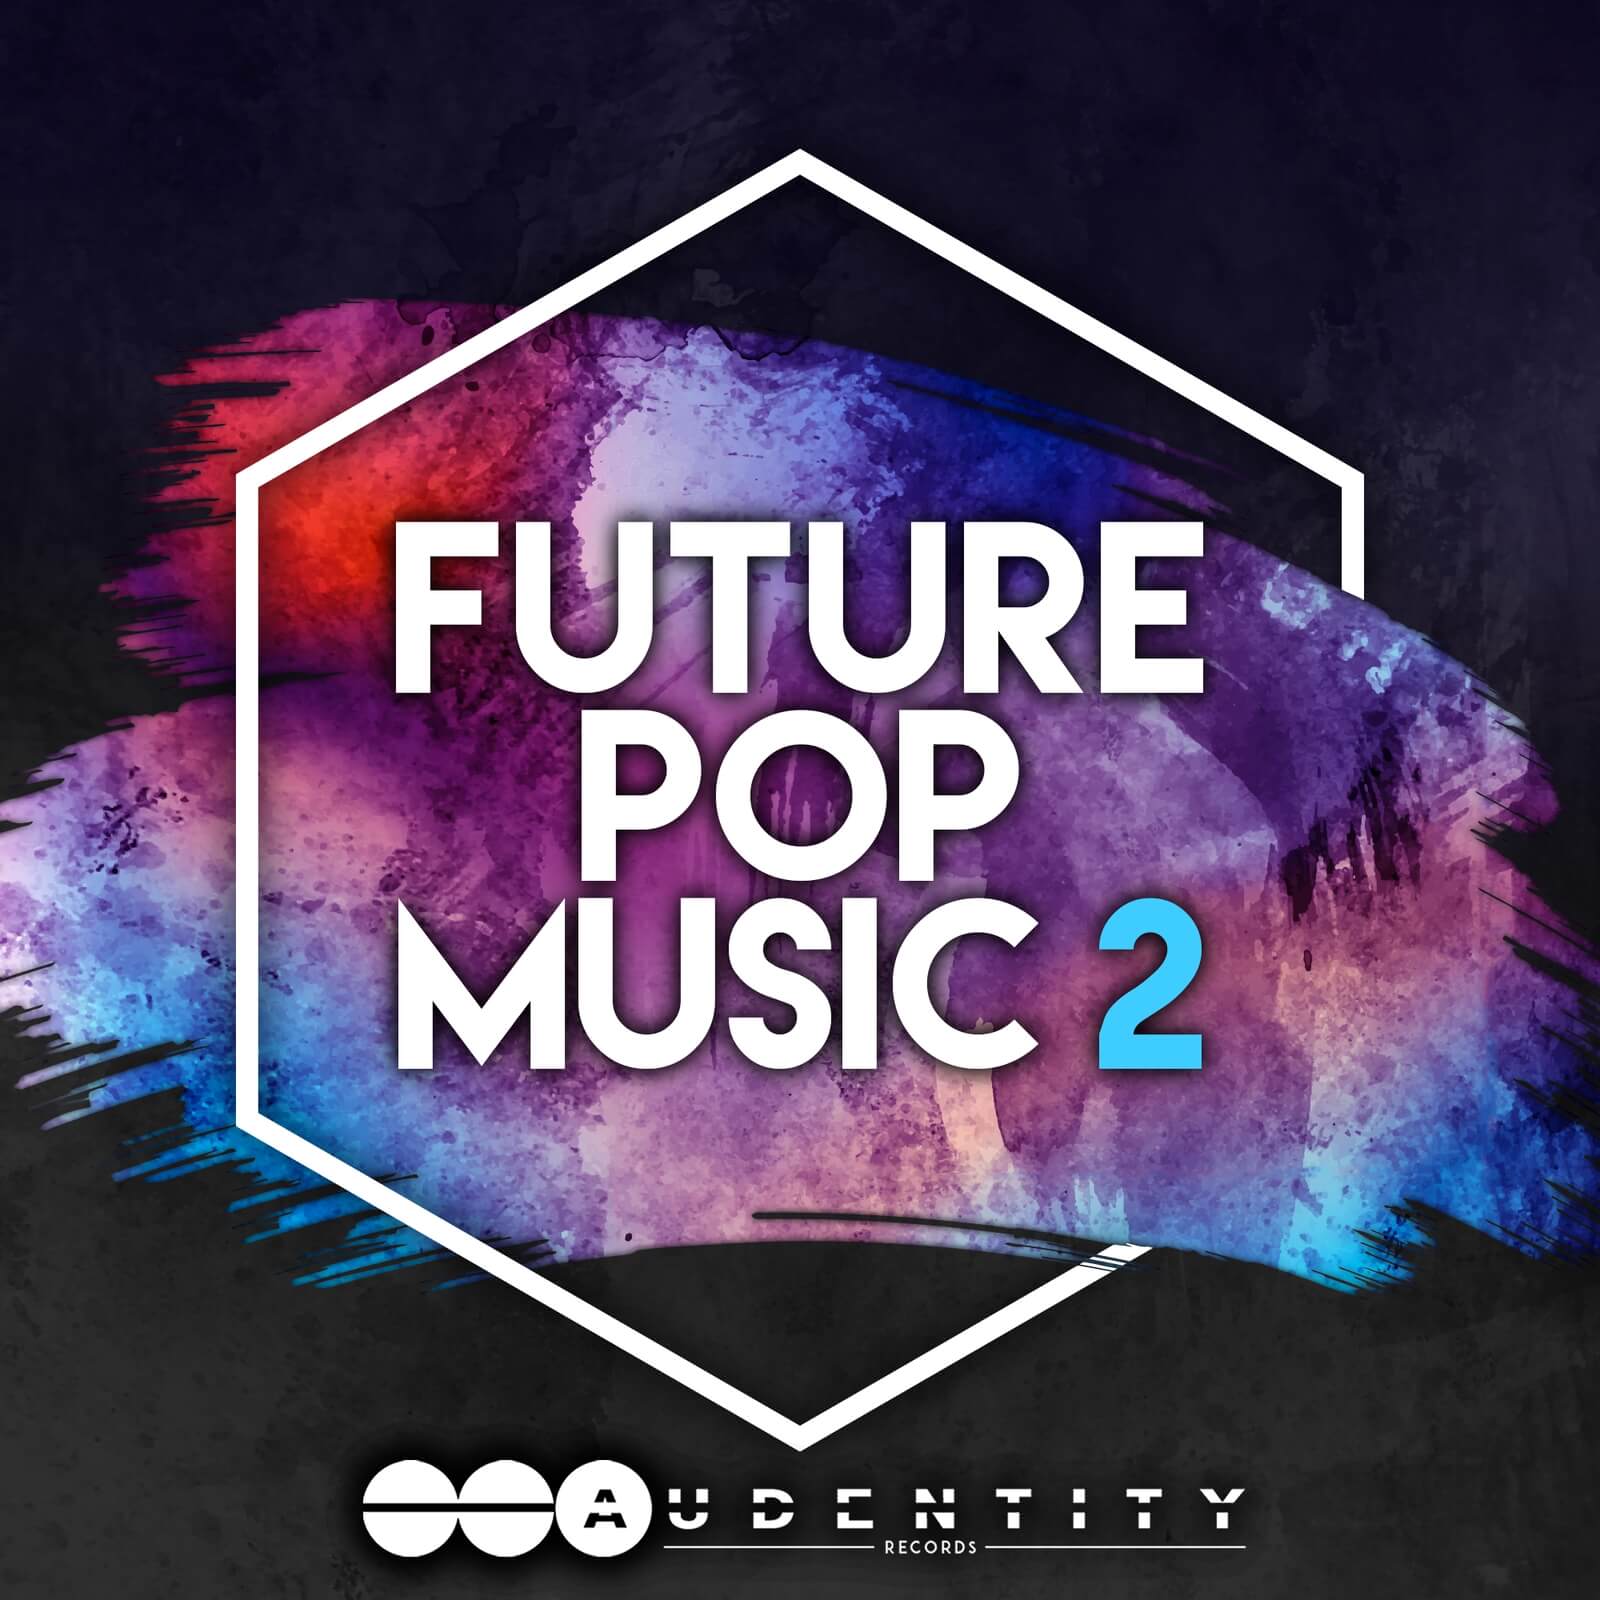 Future Pop. Recorded Future. Future Music records. Радио.в.стиле.Футуре.поп.